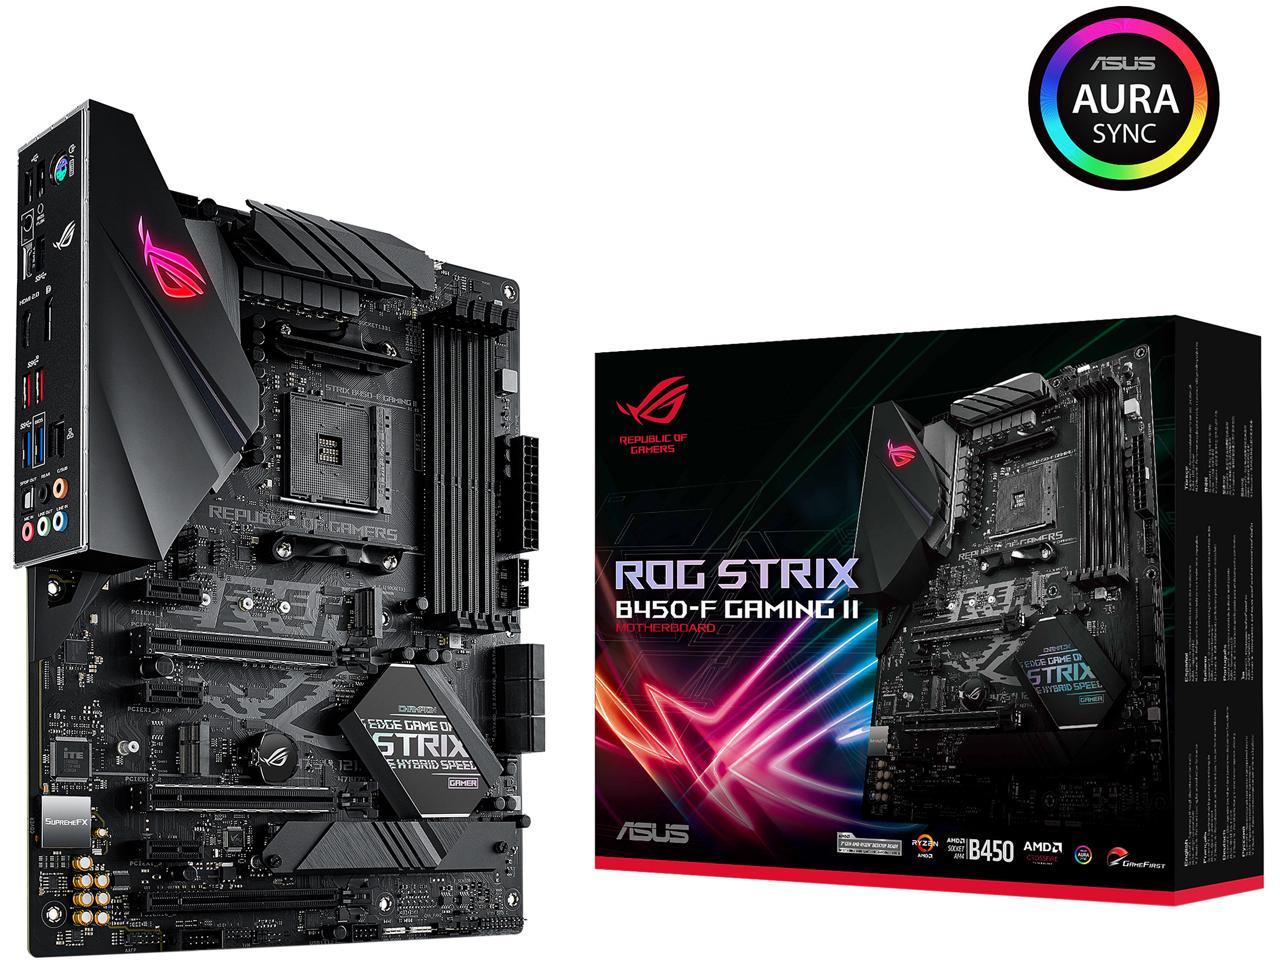 ASUS ROG Strix B450-F Gaming II AMD AM4 Motherboard $119.99